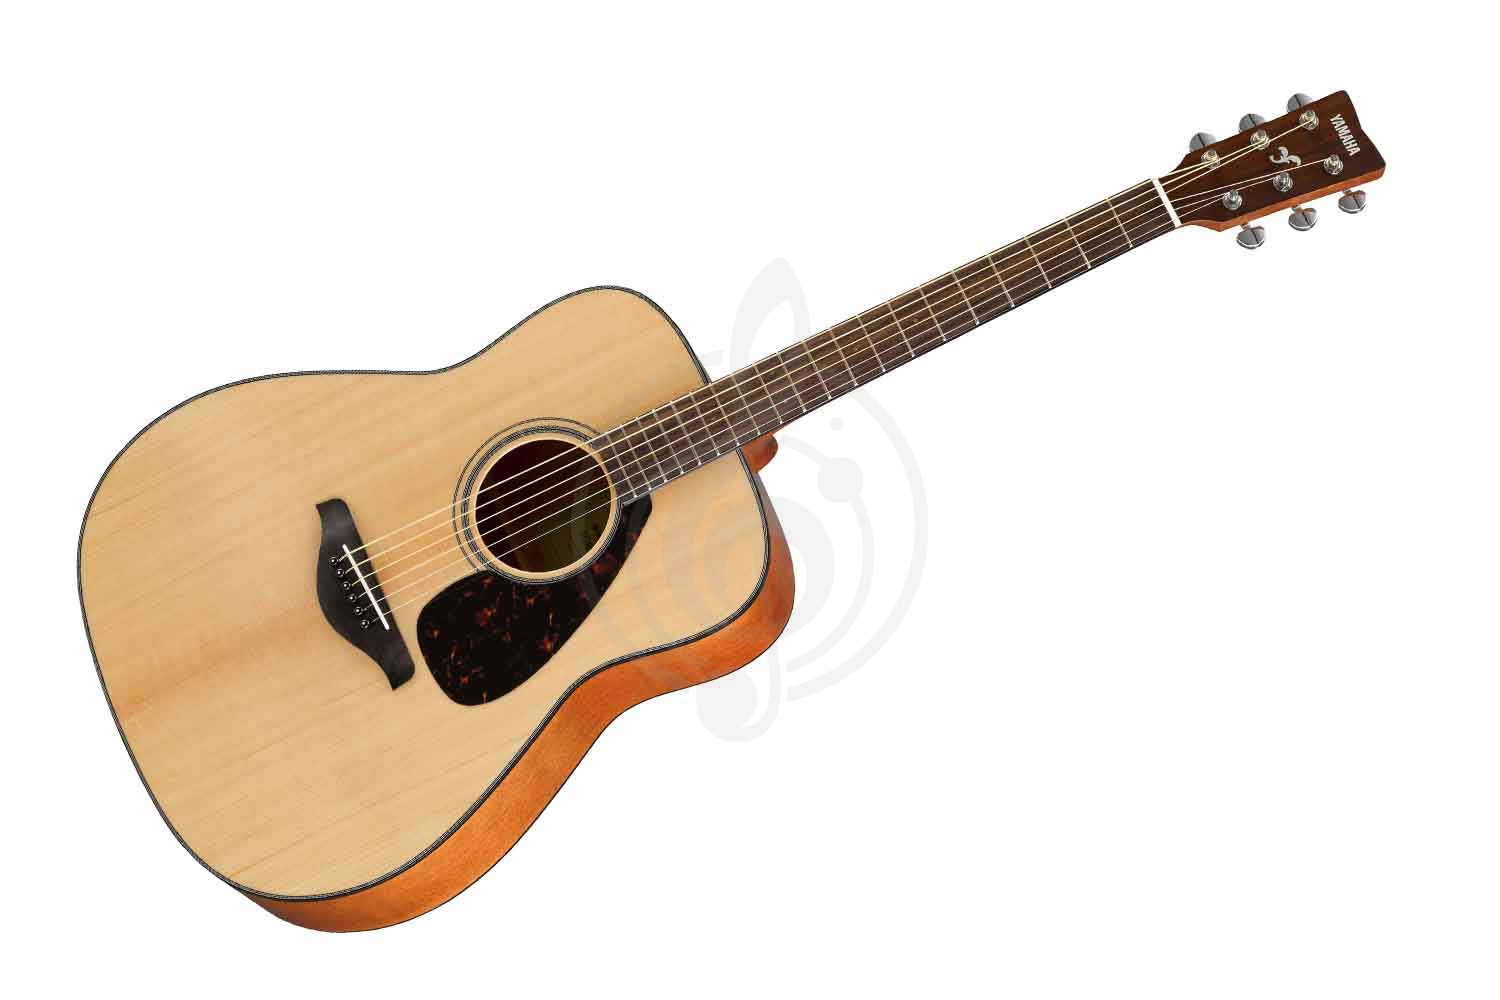 Акустическая гитара Акустические гитары Yamaha Yamaha FG800 - акустическая гитара дредноут, цвет натурал FG800 NATURAL//02 - фото 1